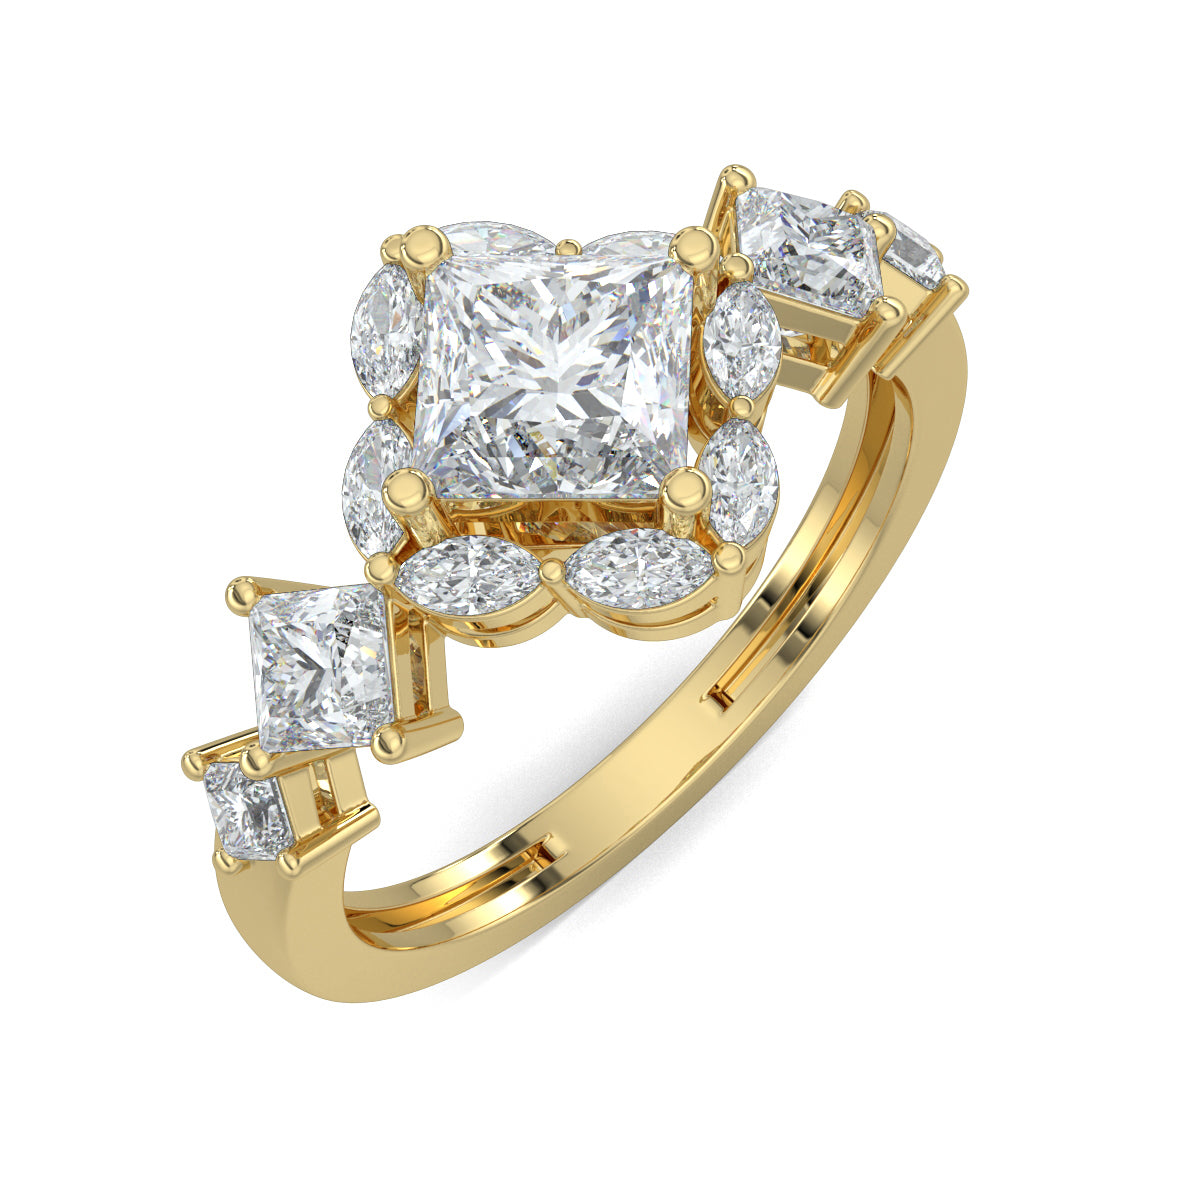 Yellow Gold, Diamond Ring, Aurora Dream Solitaire Ring, natural diamonds, lab-grown diamonds, diamond ring, solitaire ring, princess diamond, marquise diamond, engagement ring, wedding ring, fine jewelry